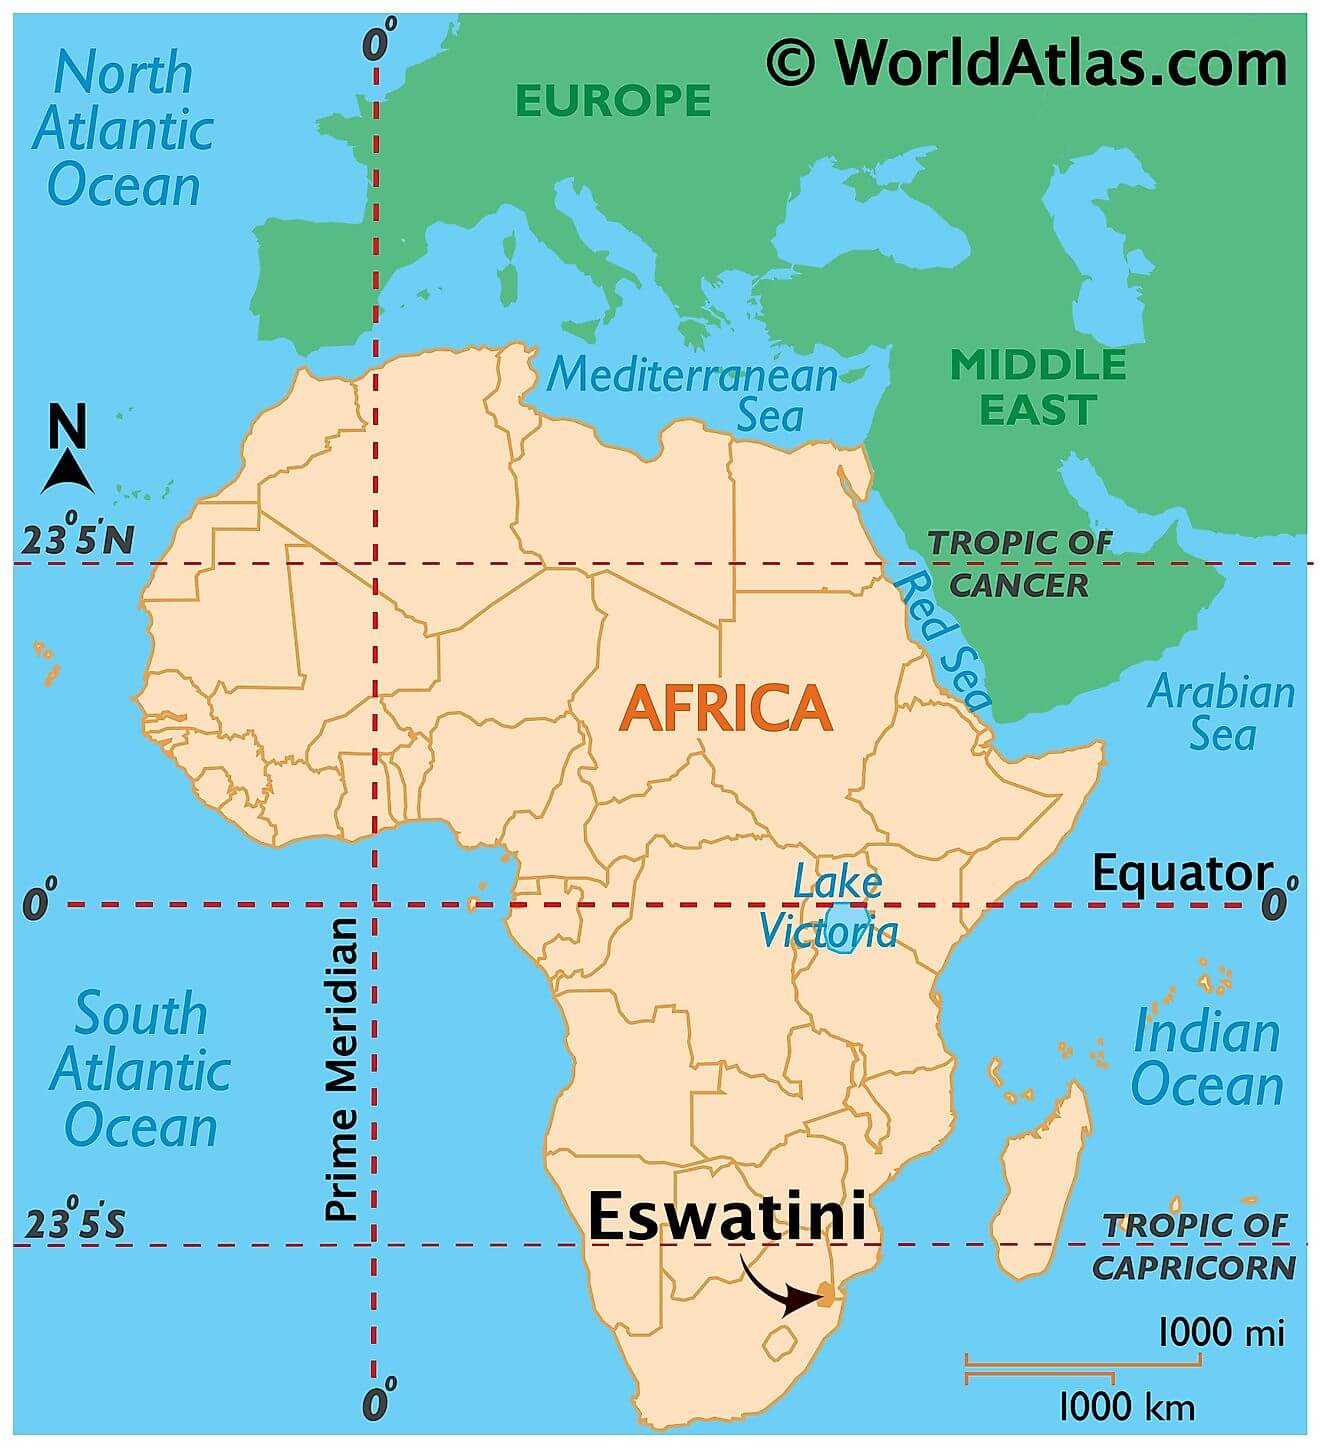 Where is Eswatini?